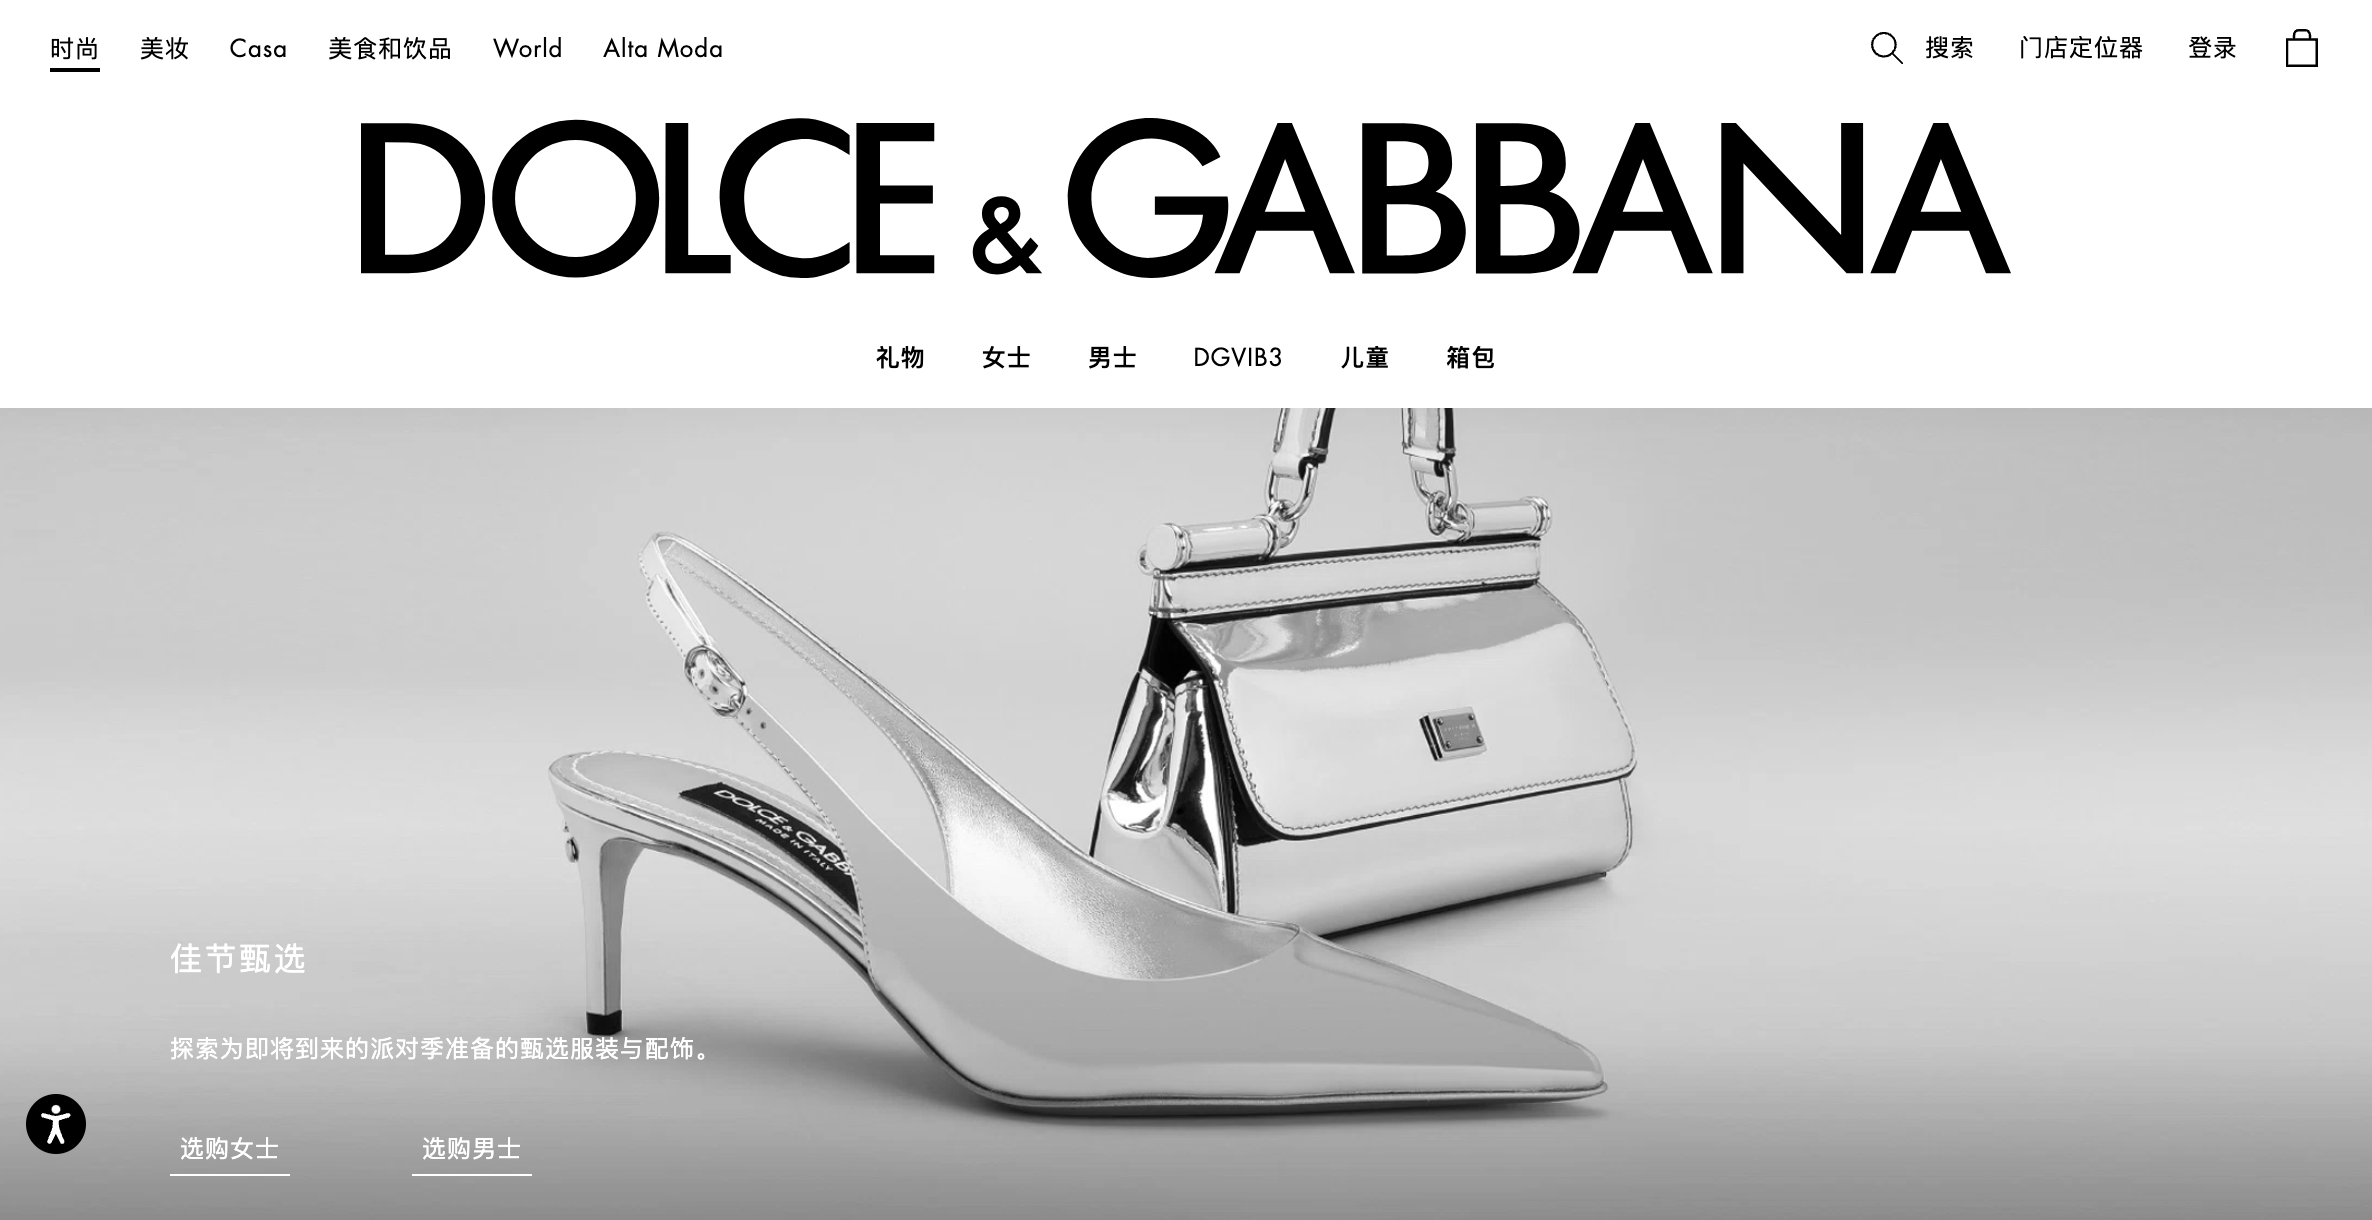 Dolce&Gabbana 考虑上市可能，IPO估值或达60亿欧元